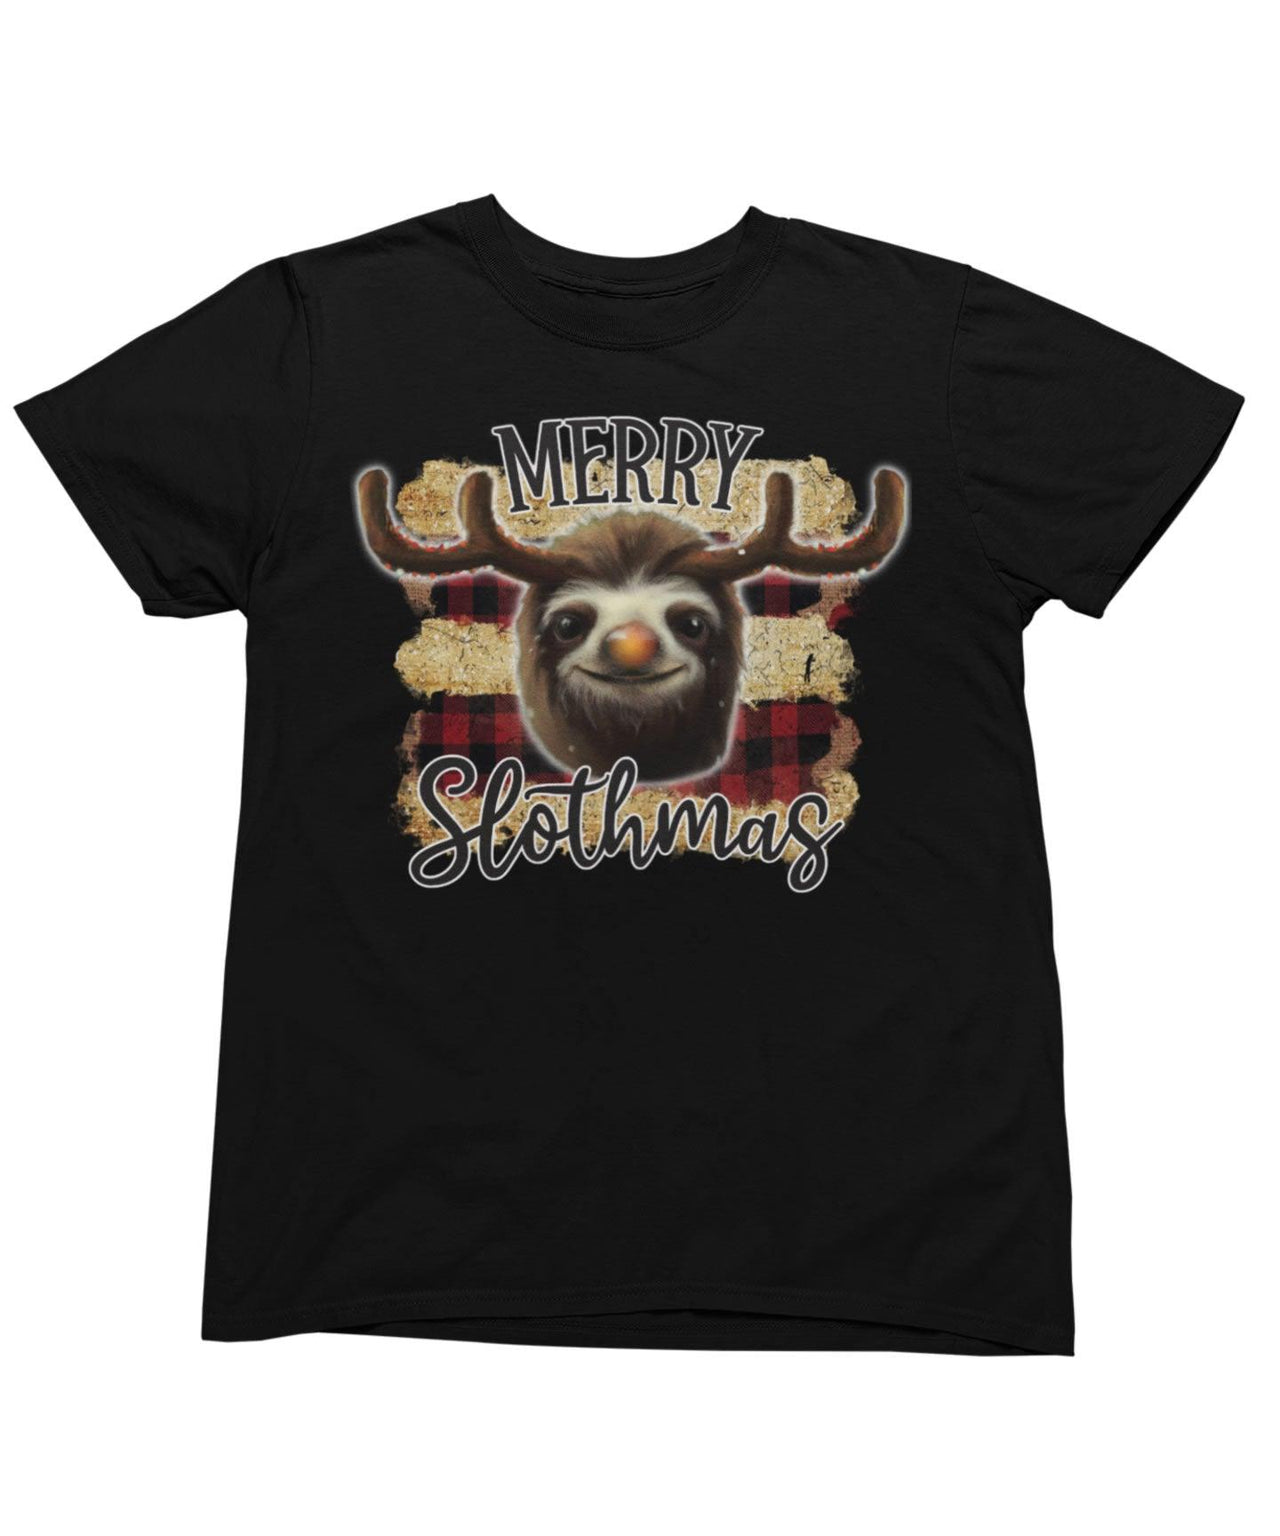 Merry Slothmas Christmas Unisex Mens T-Shirt 8Ball